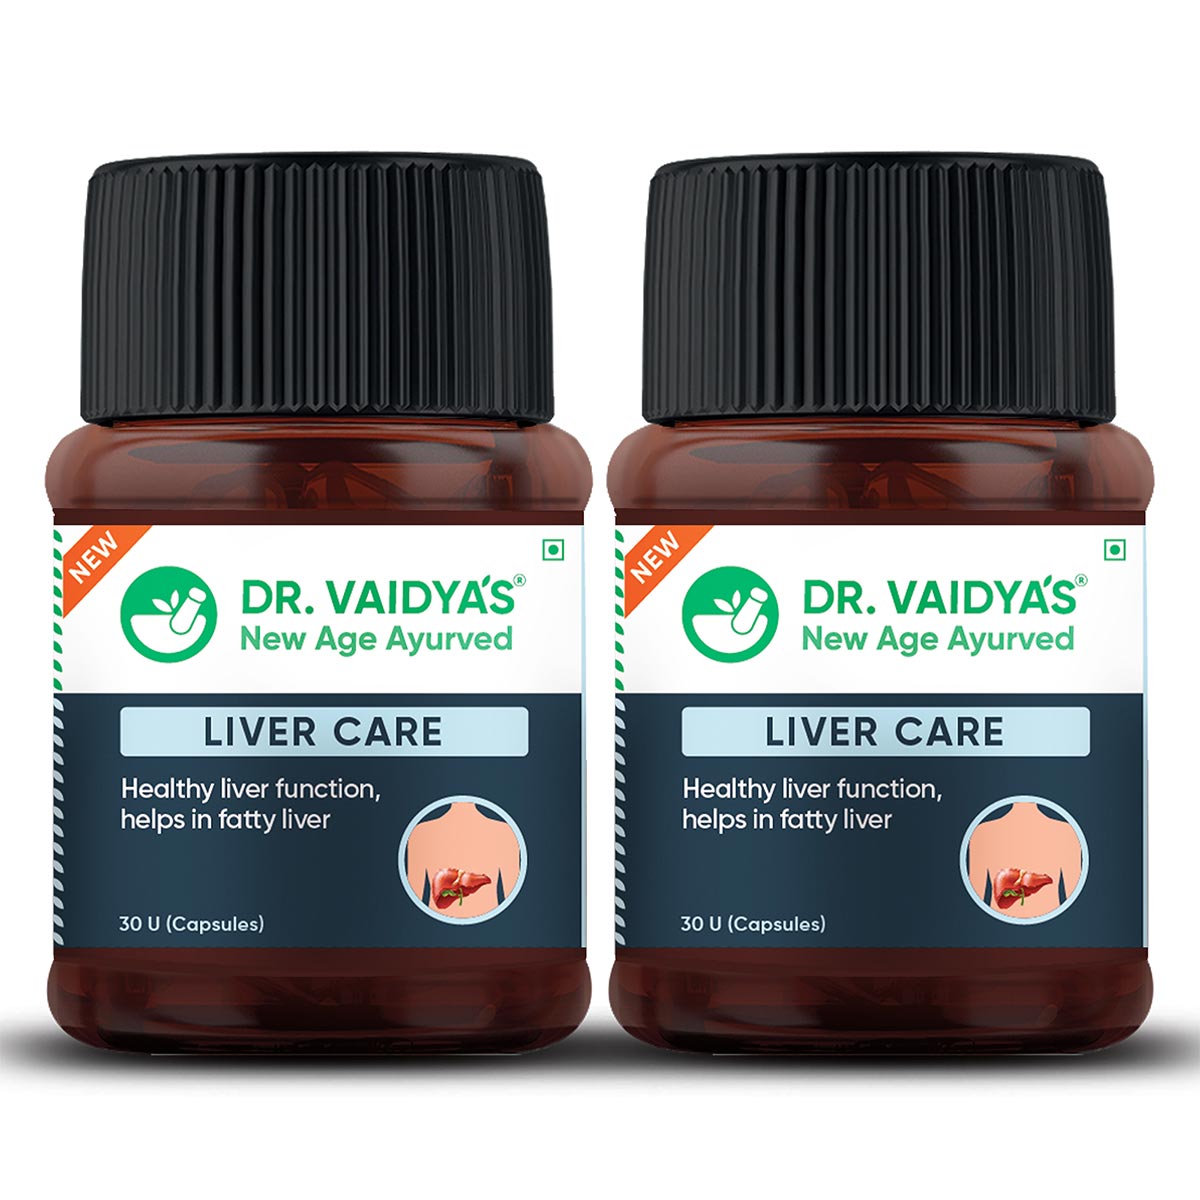 Dr. Vaidya's LiverCare